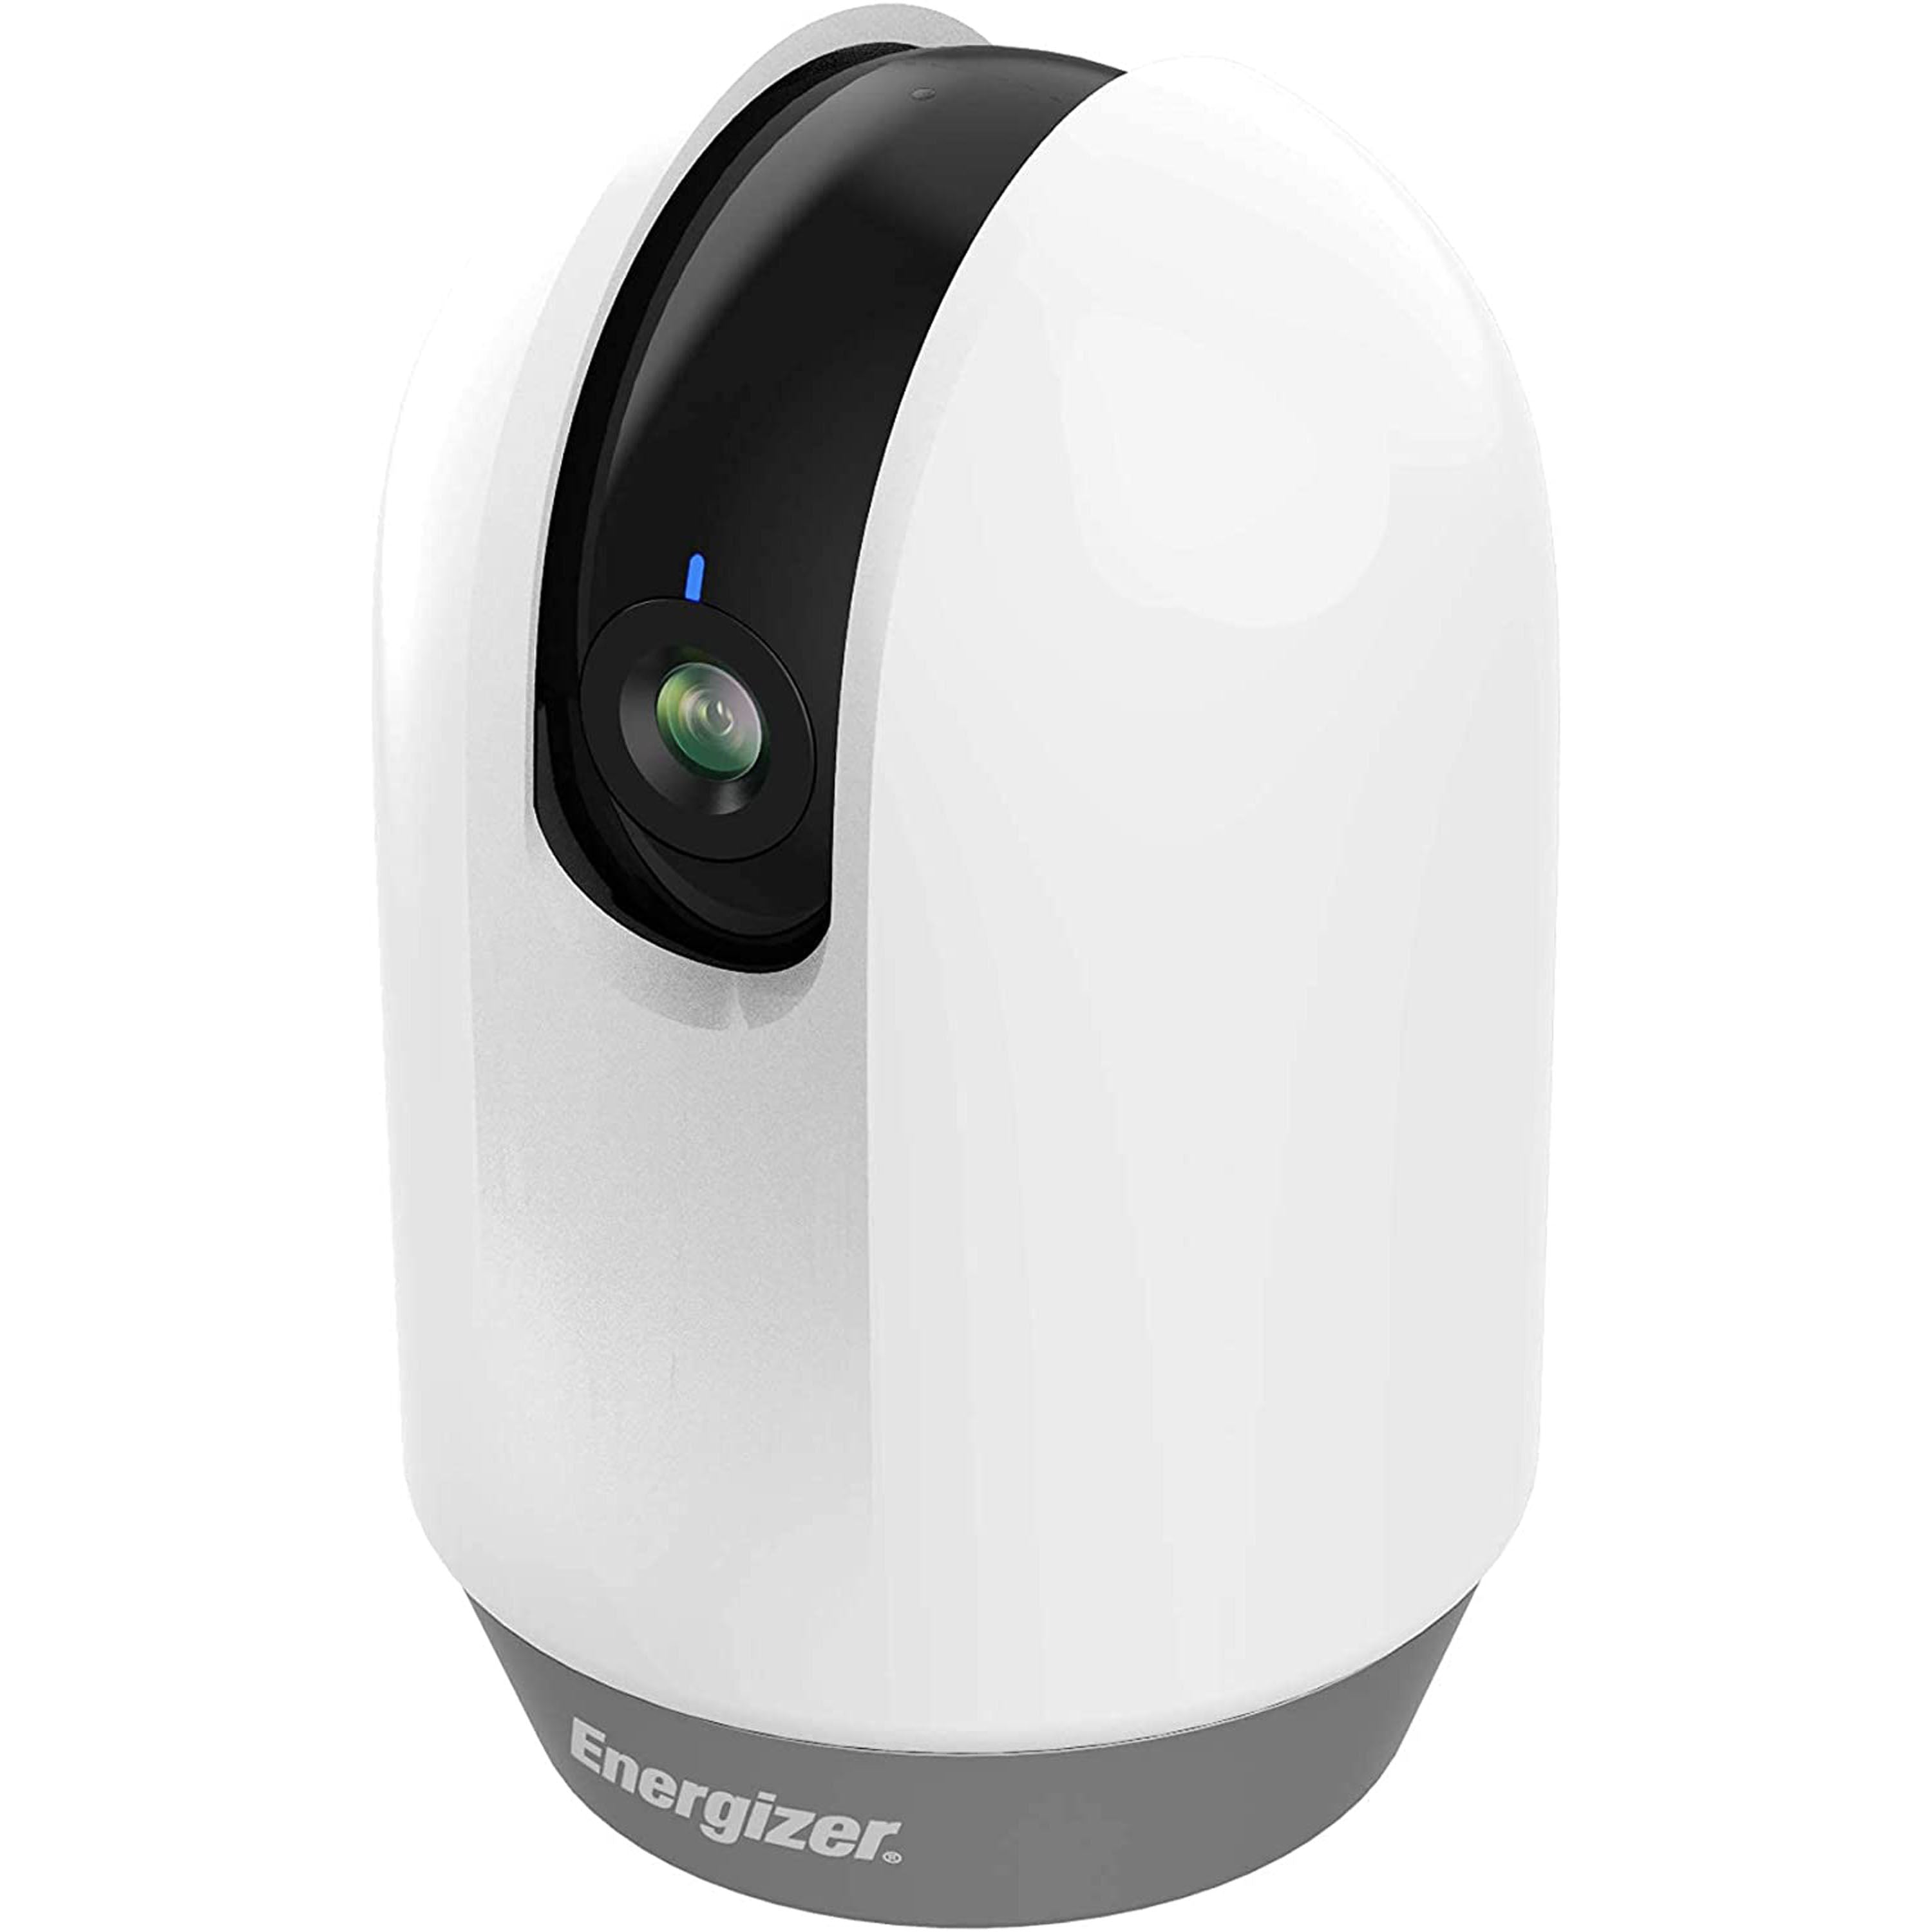 Energizer Smart 1080p Indoor Pan and Tilt Camera - White